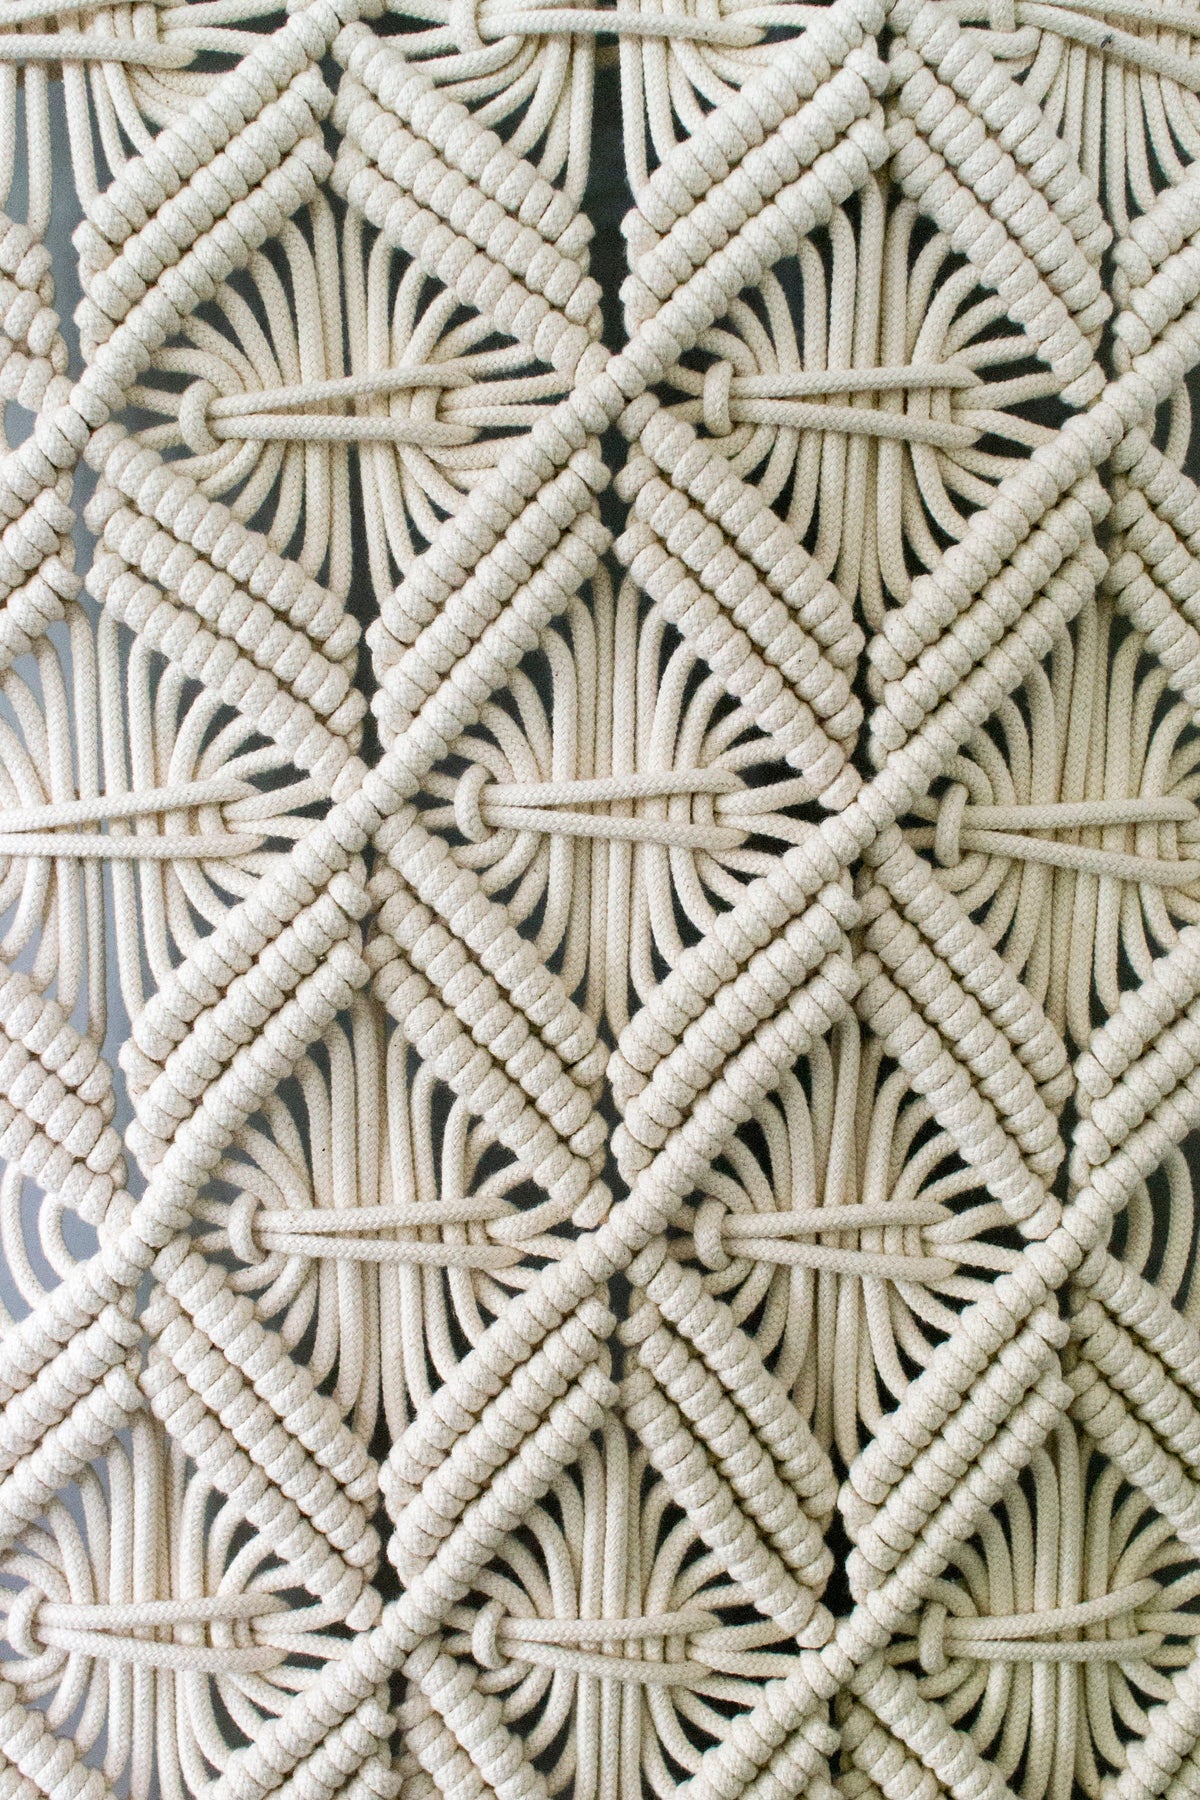 Geometric Macrame Wall Hanging - 5mm Braided Cotton Rope - ~100cm L x ~65cm W